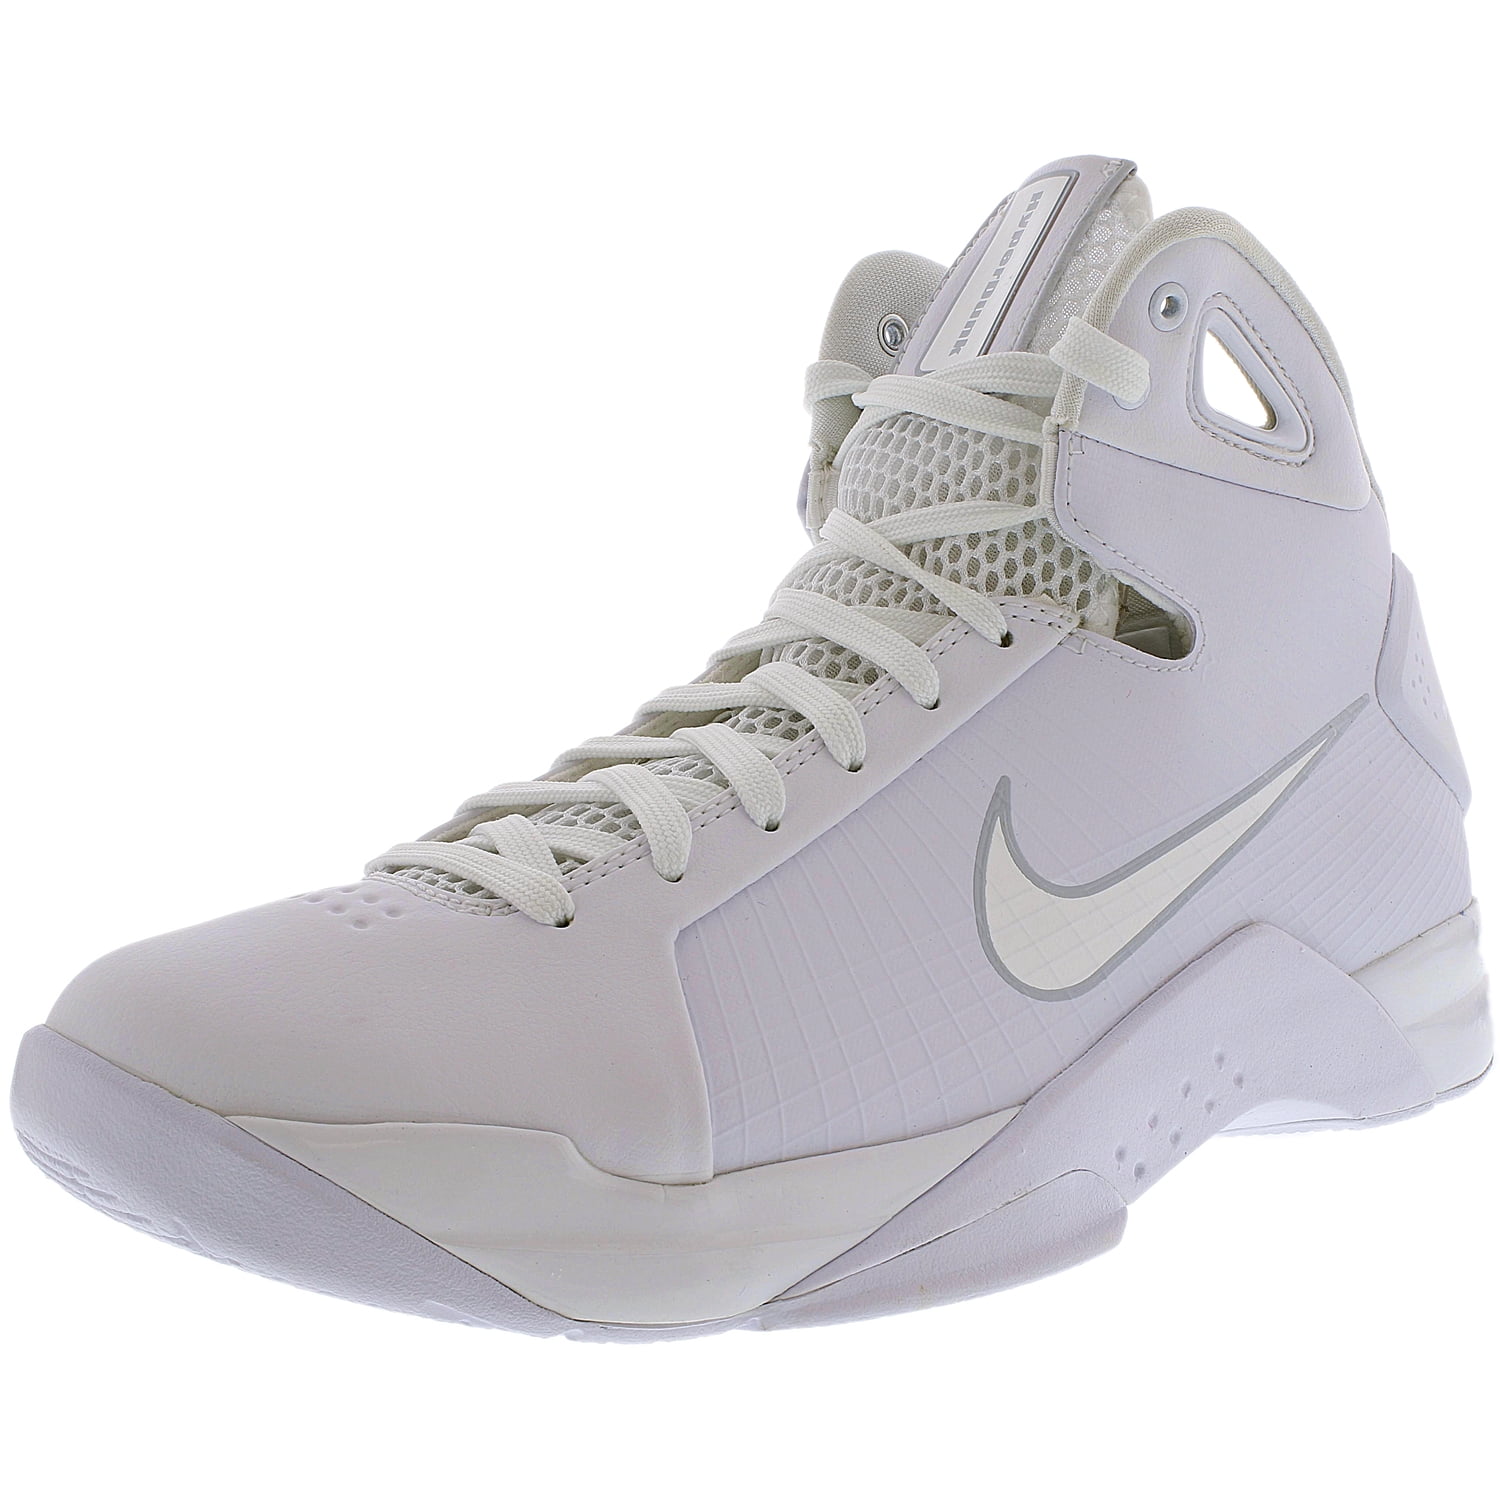 White nike basketball shoes